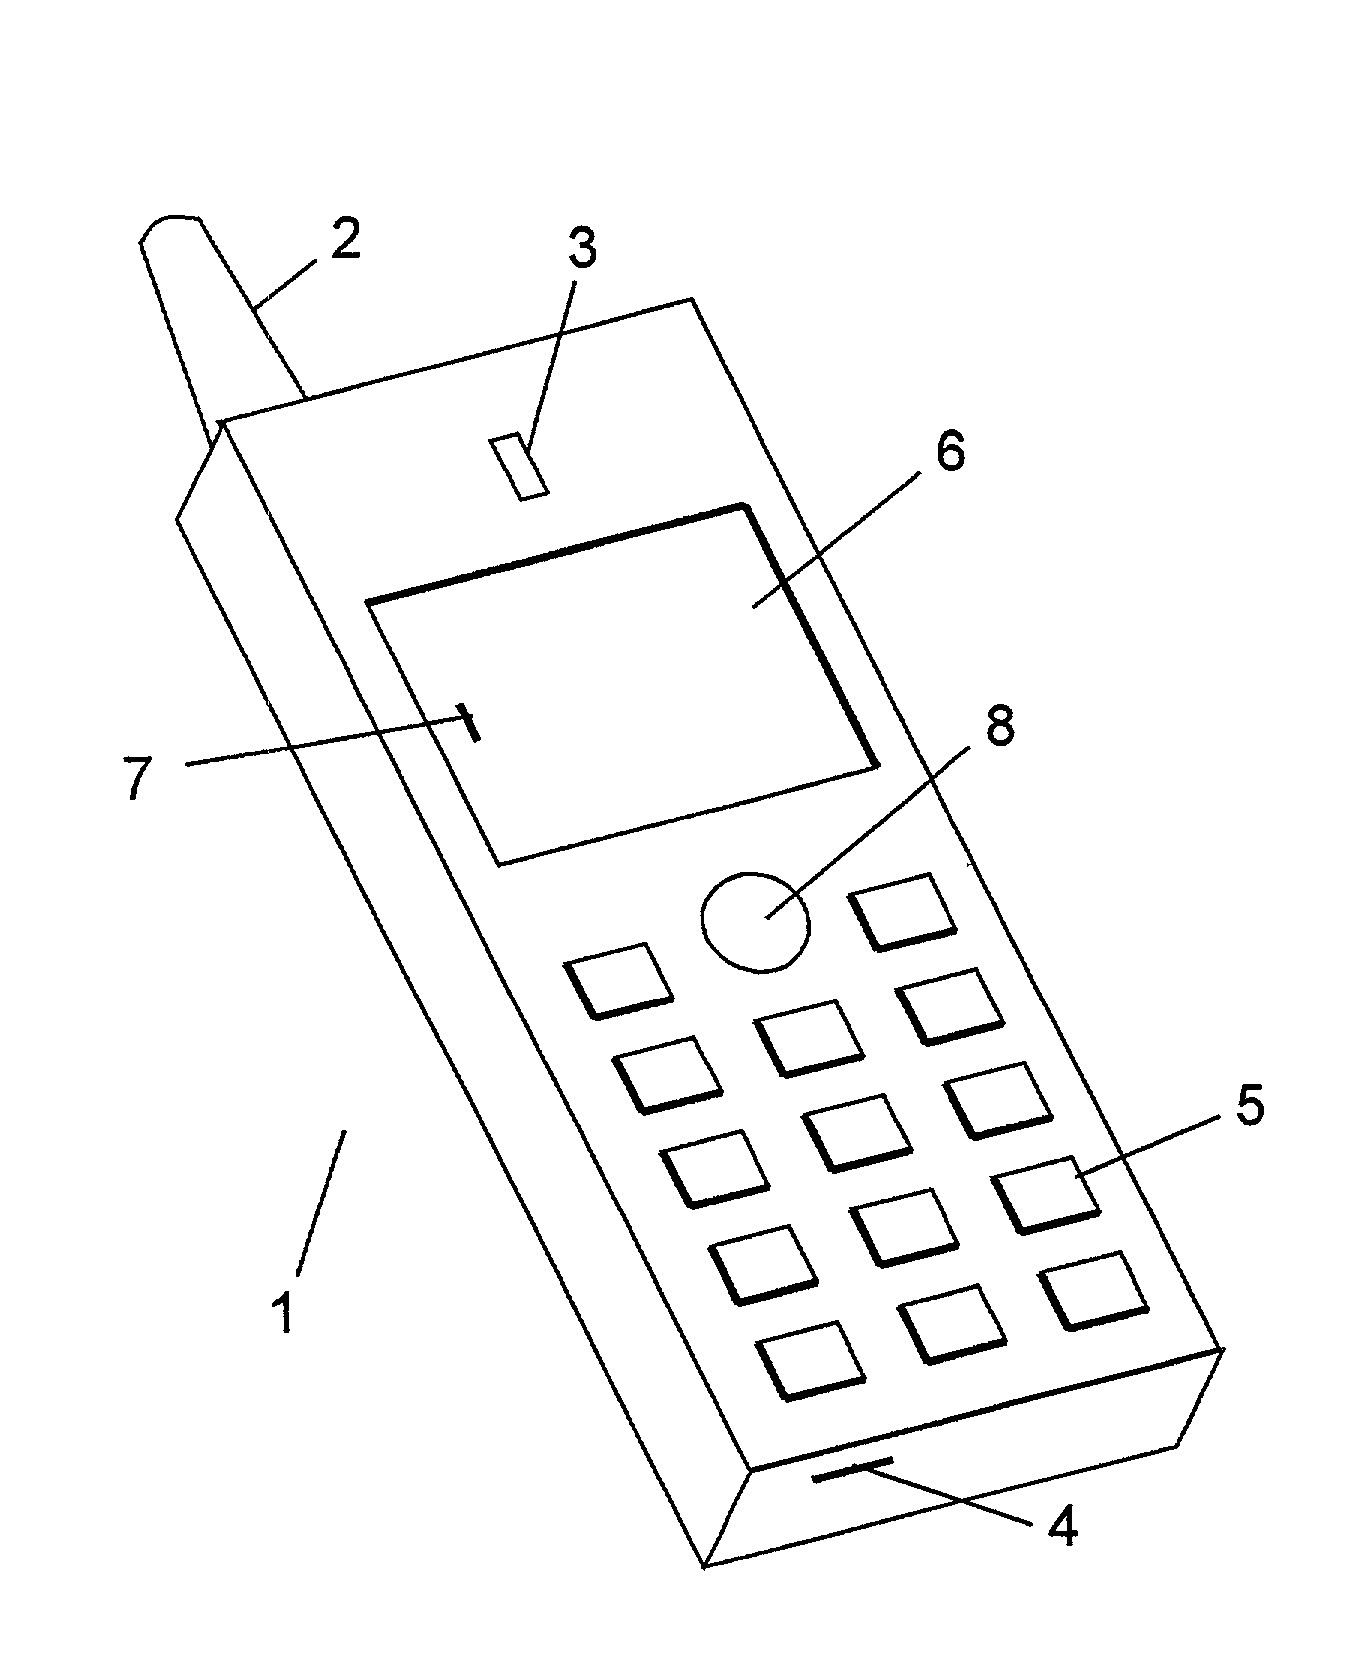 Portable radio communications device